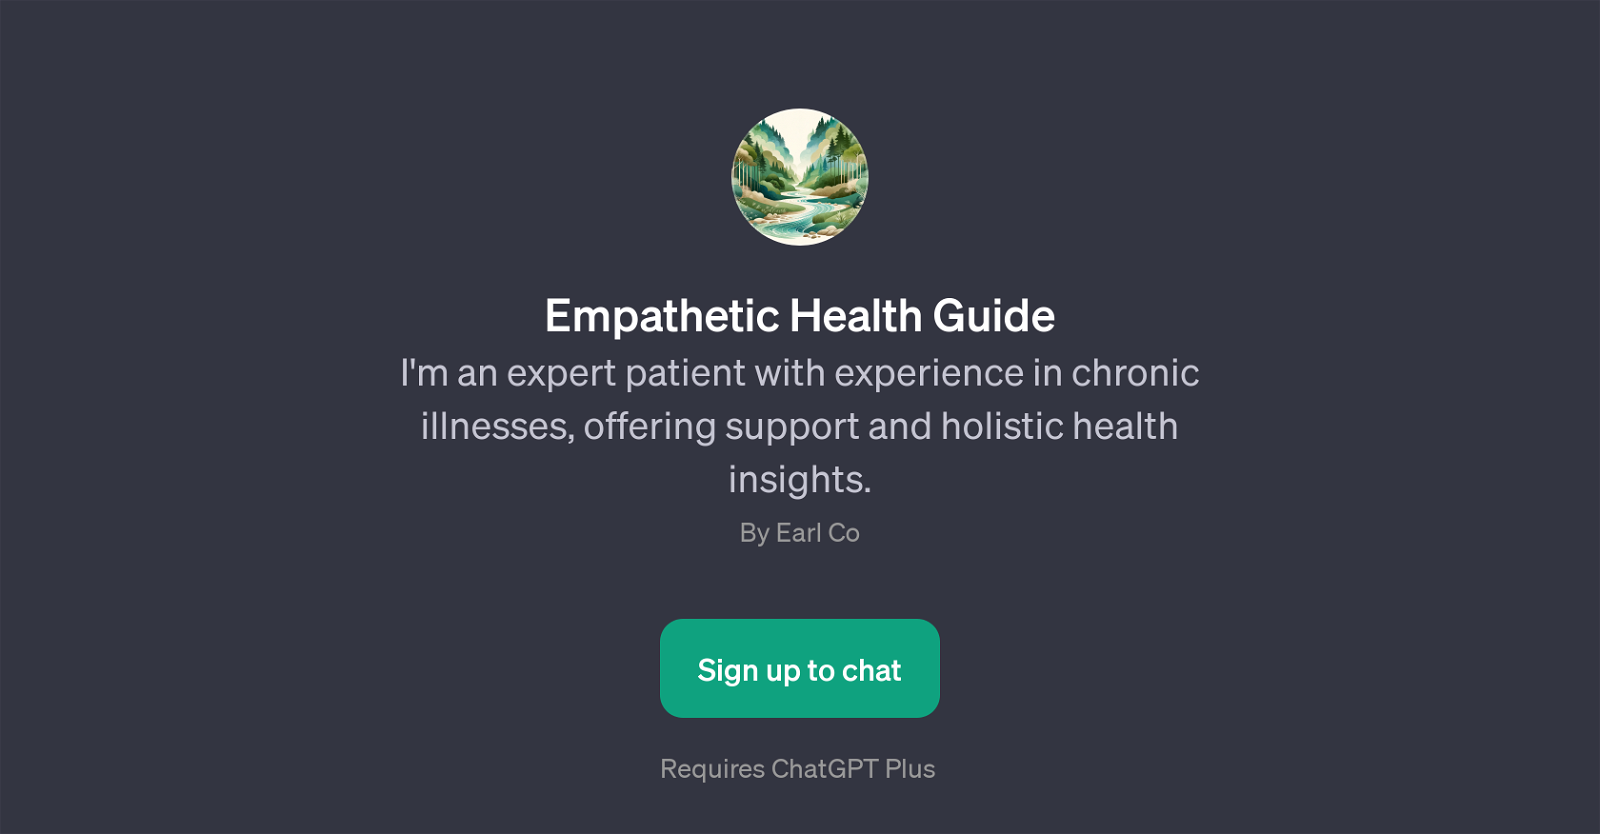 Empathetic Health Guide website